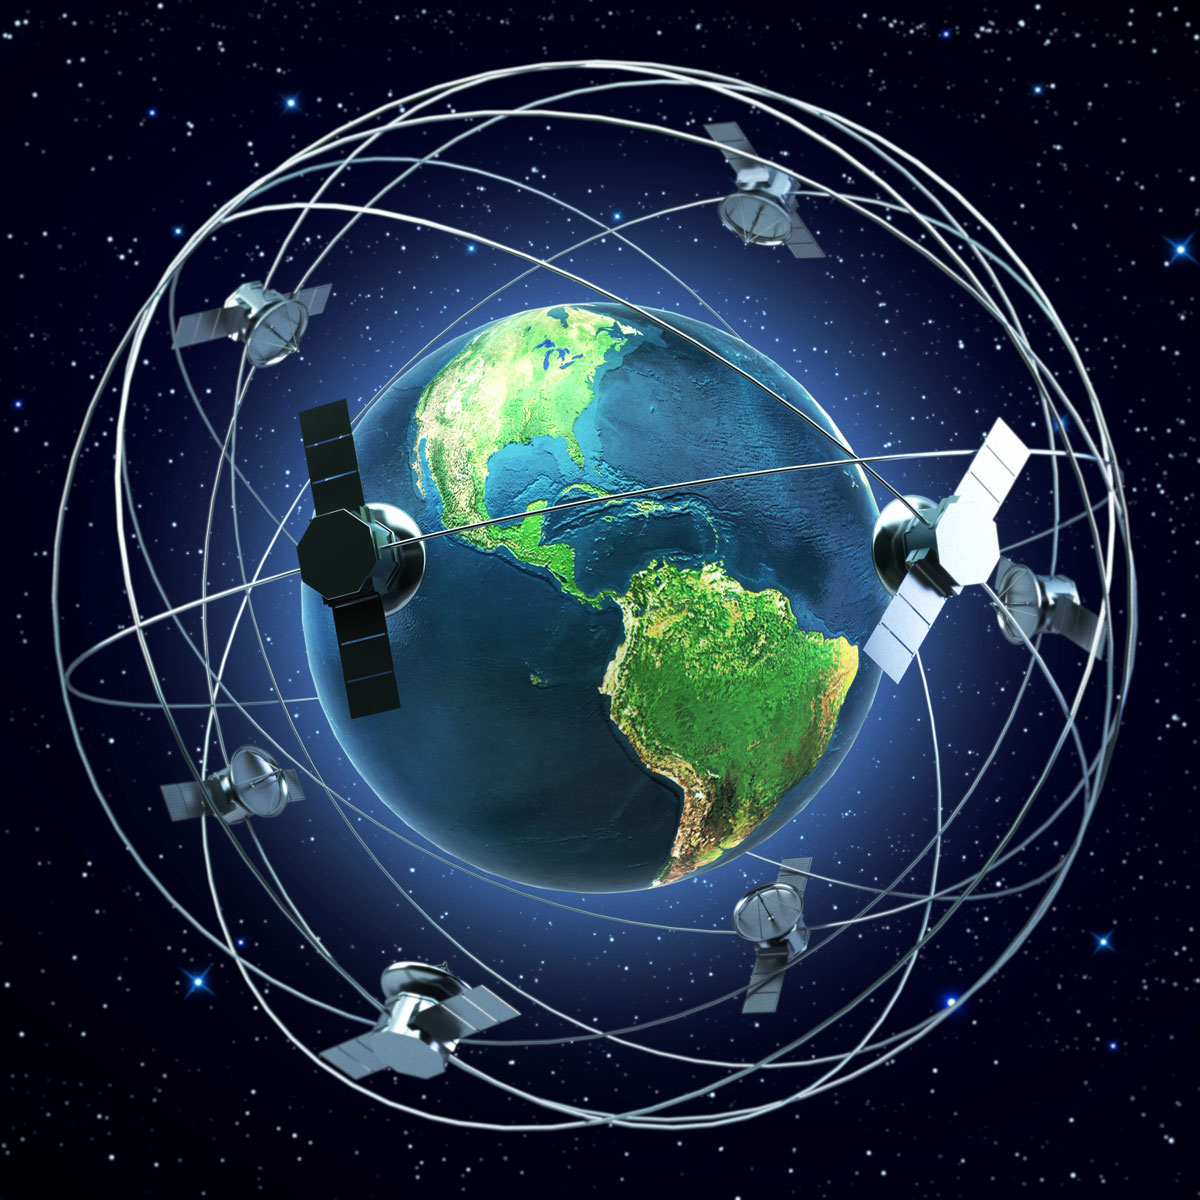 Resultado de imagem para 24 to 32 satellites orbiting the Earth at an altitude of 12,500 miles.